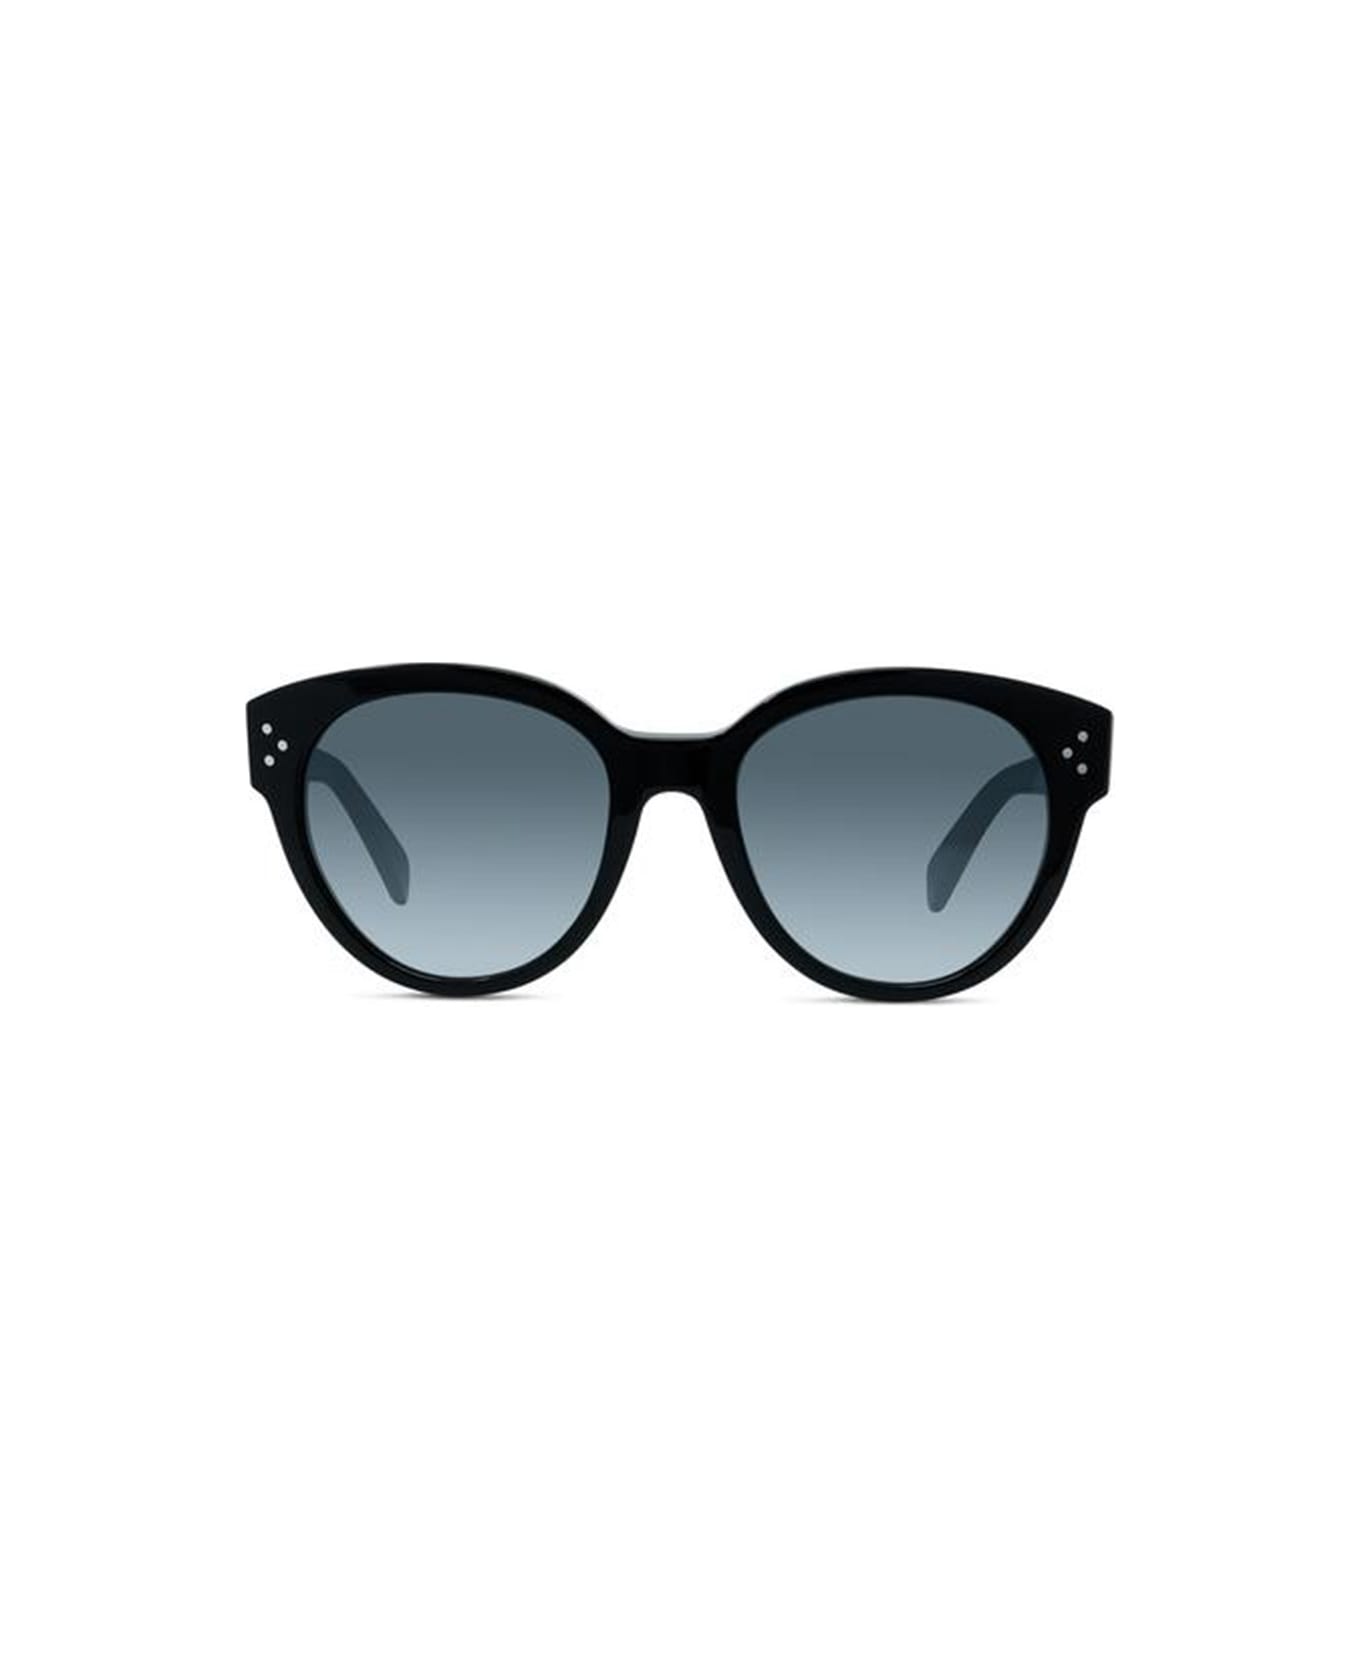 Celine Sunglasses - Nero/Blu sfumato